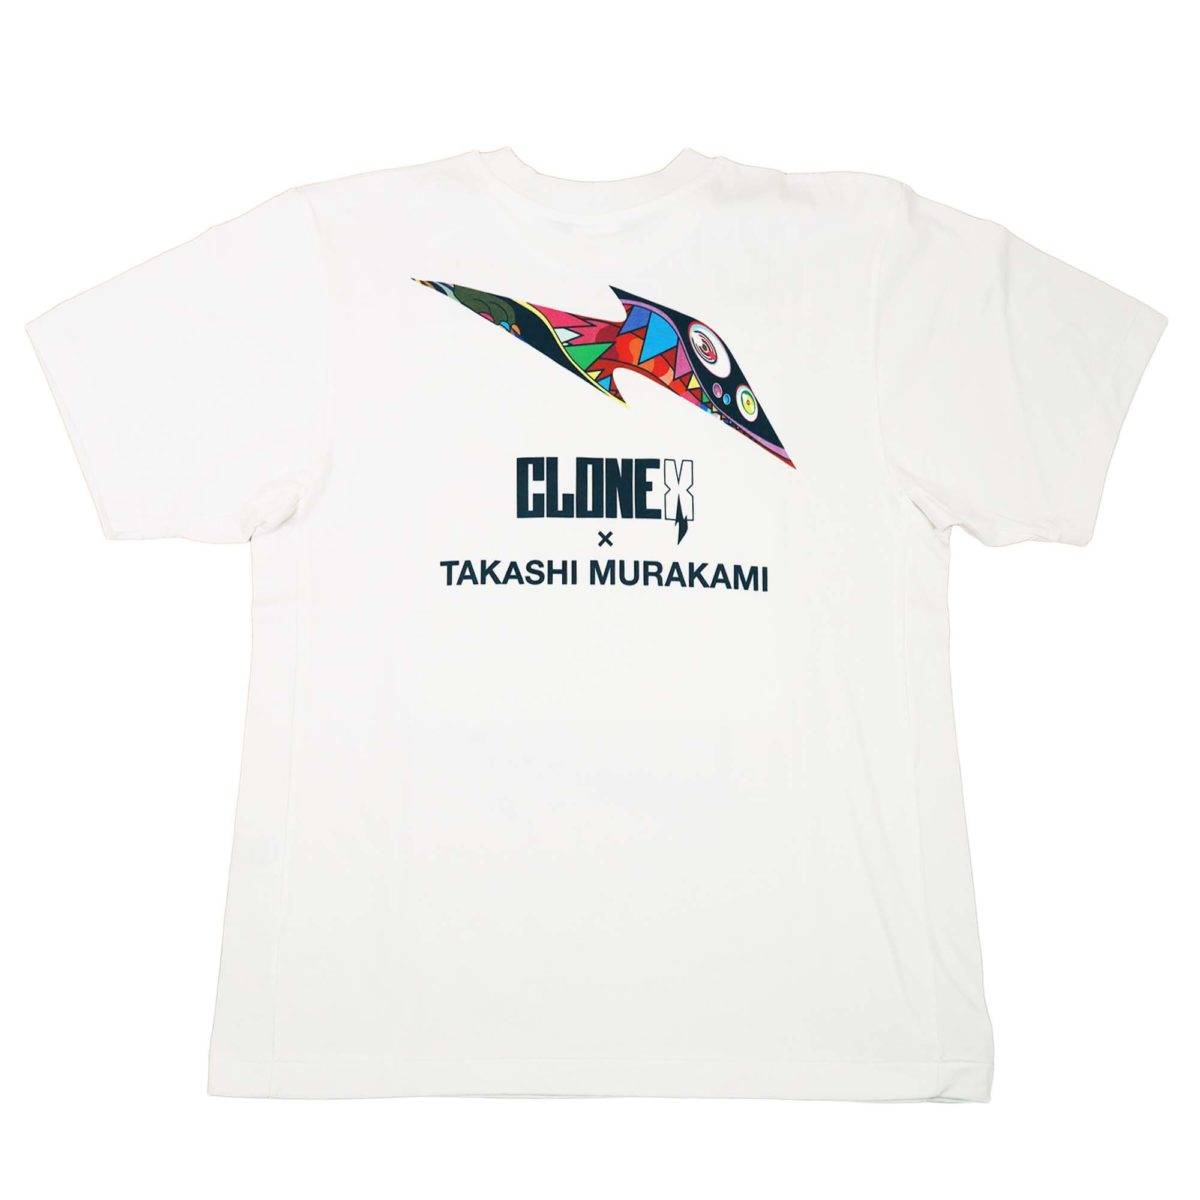 CLONE X × TAKASHI MURAKAMI T-Shirts #2 Lonesome Cowboy -WHITE